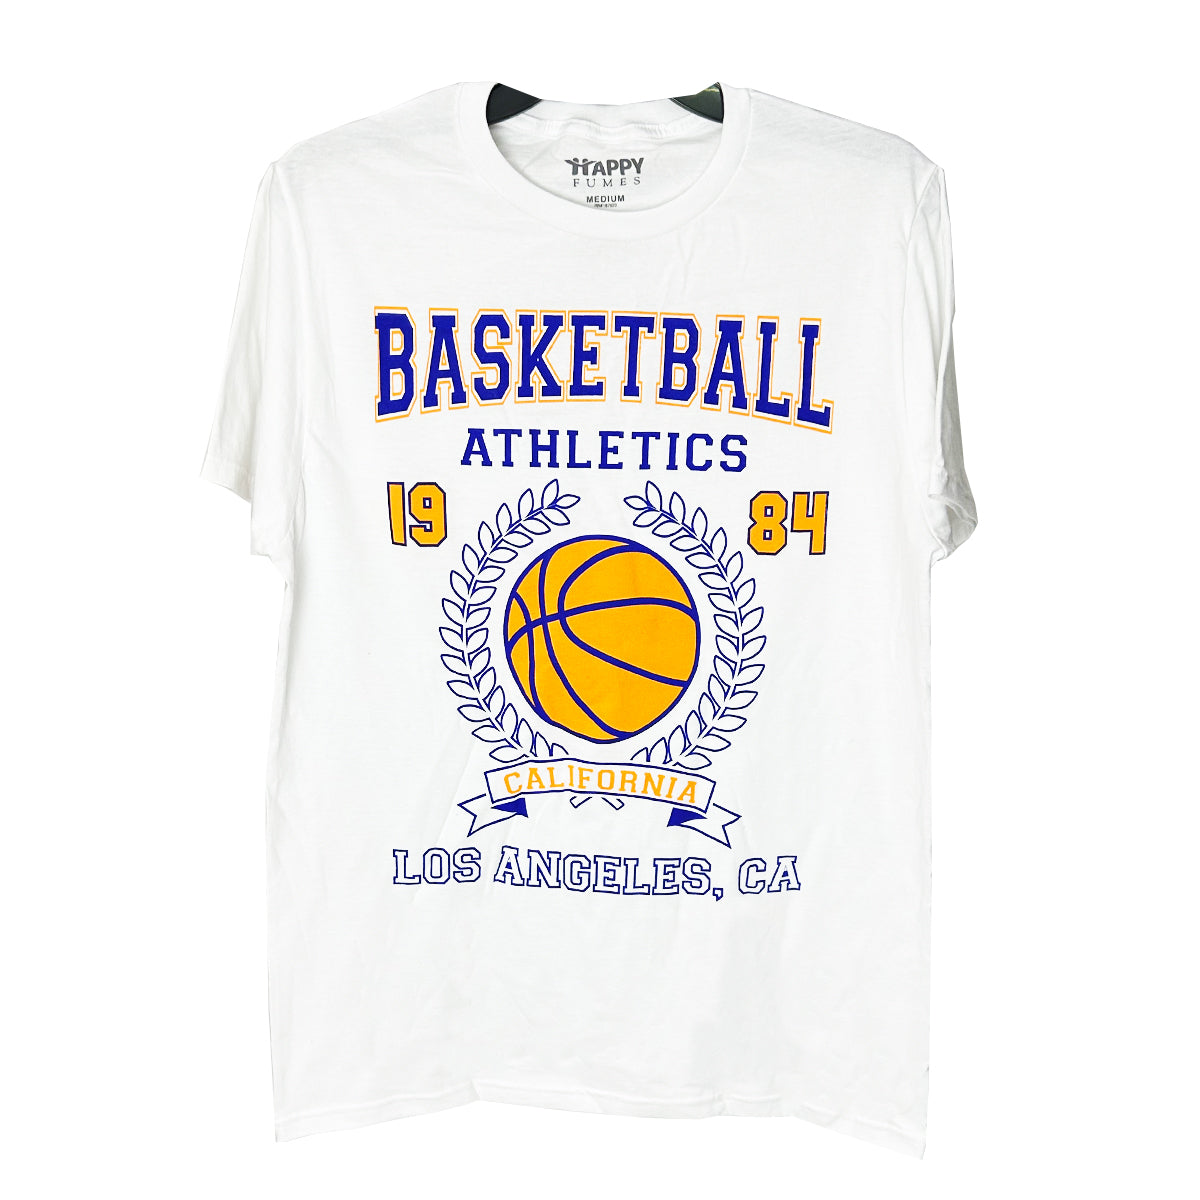 Basketball White Short Sleeve T-Shirt - Pack of 6 Units  1S, 2M, 2L, 1XL